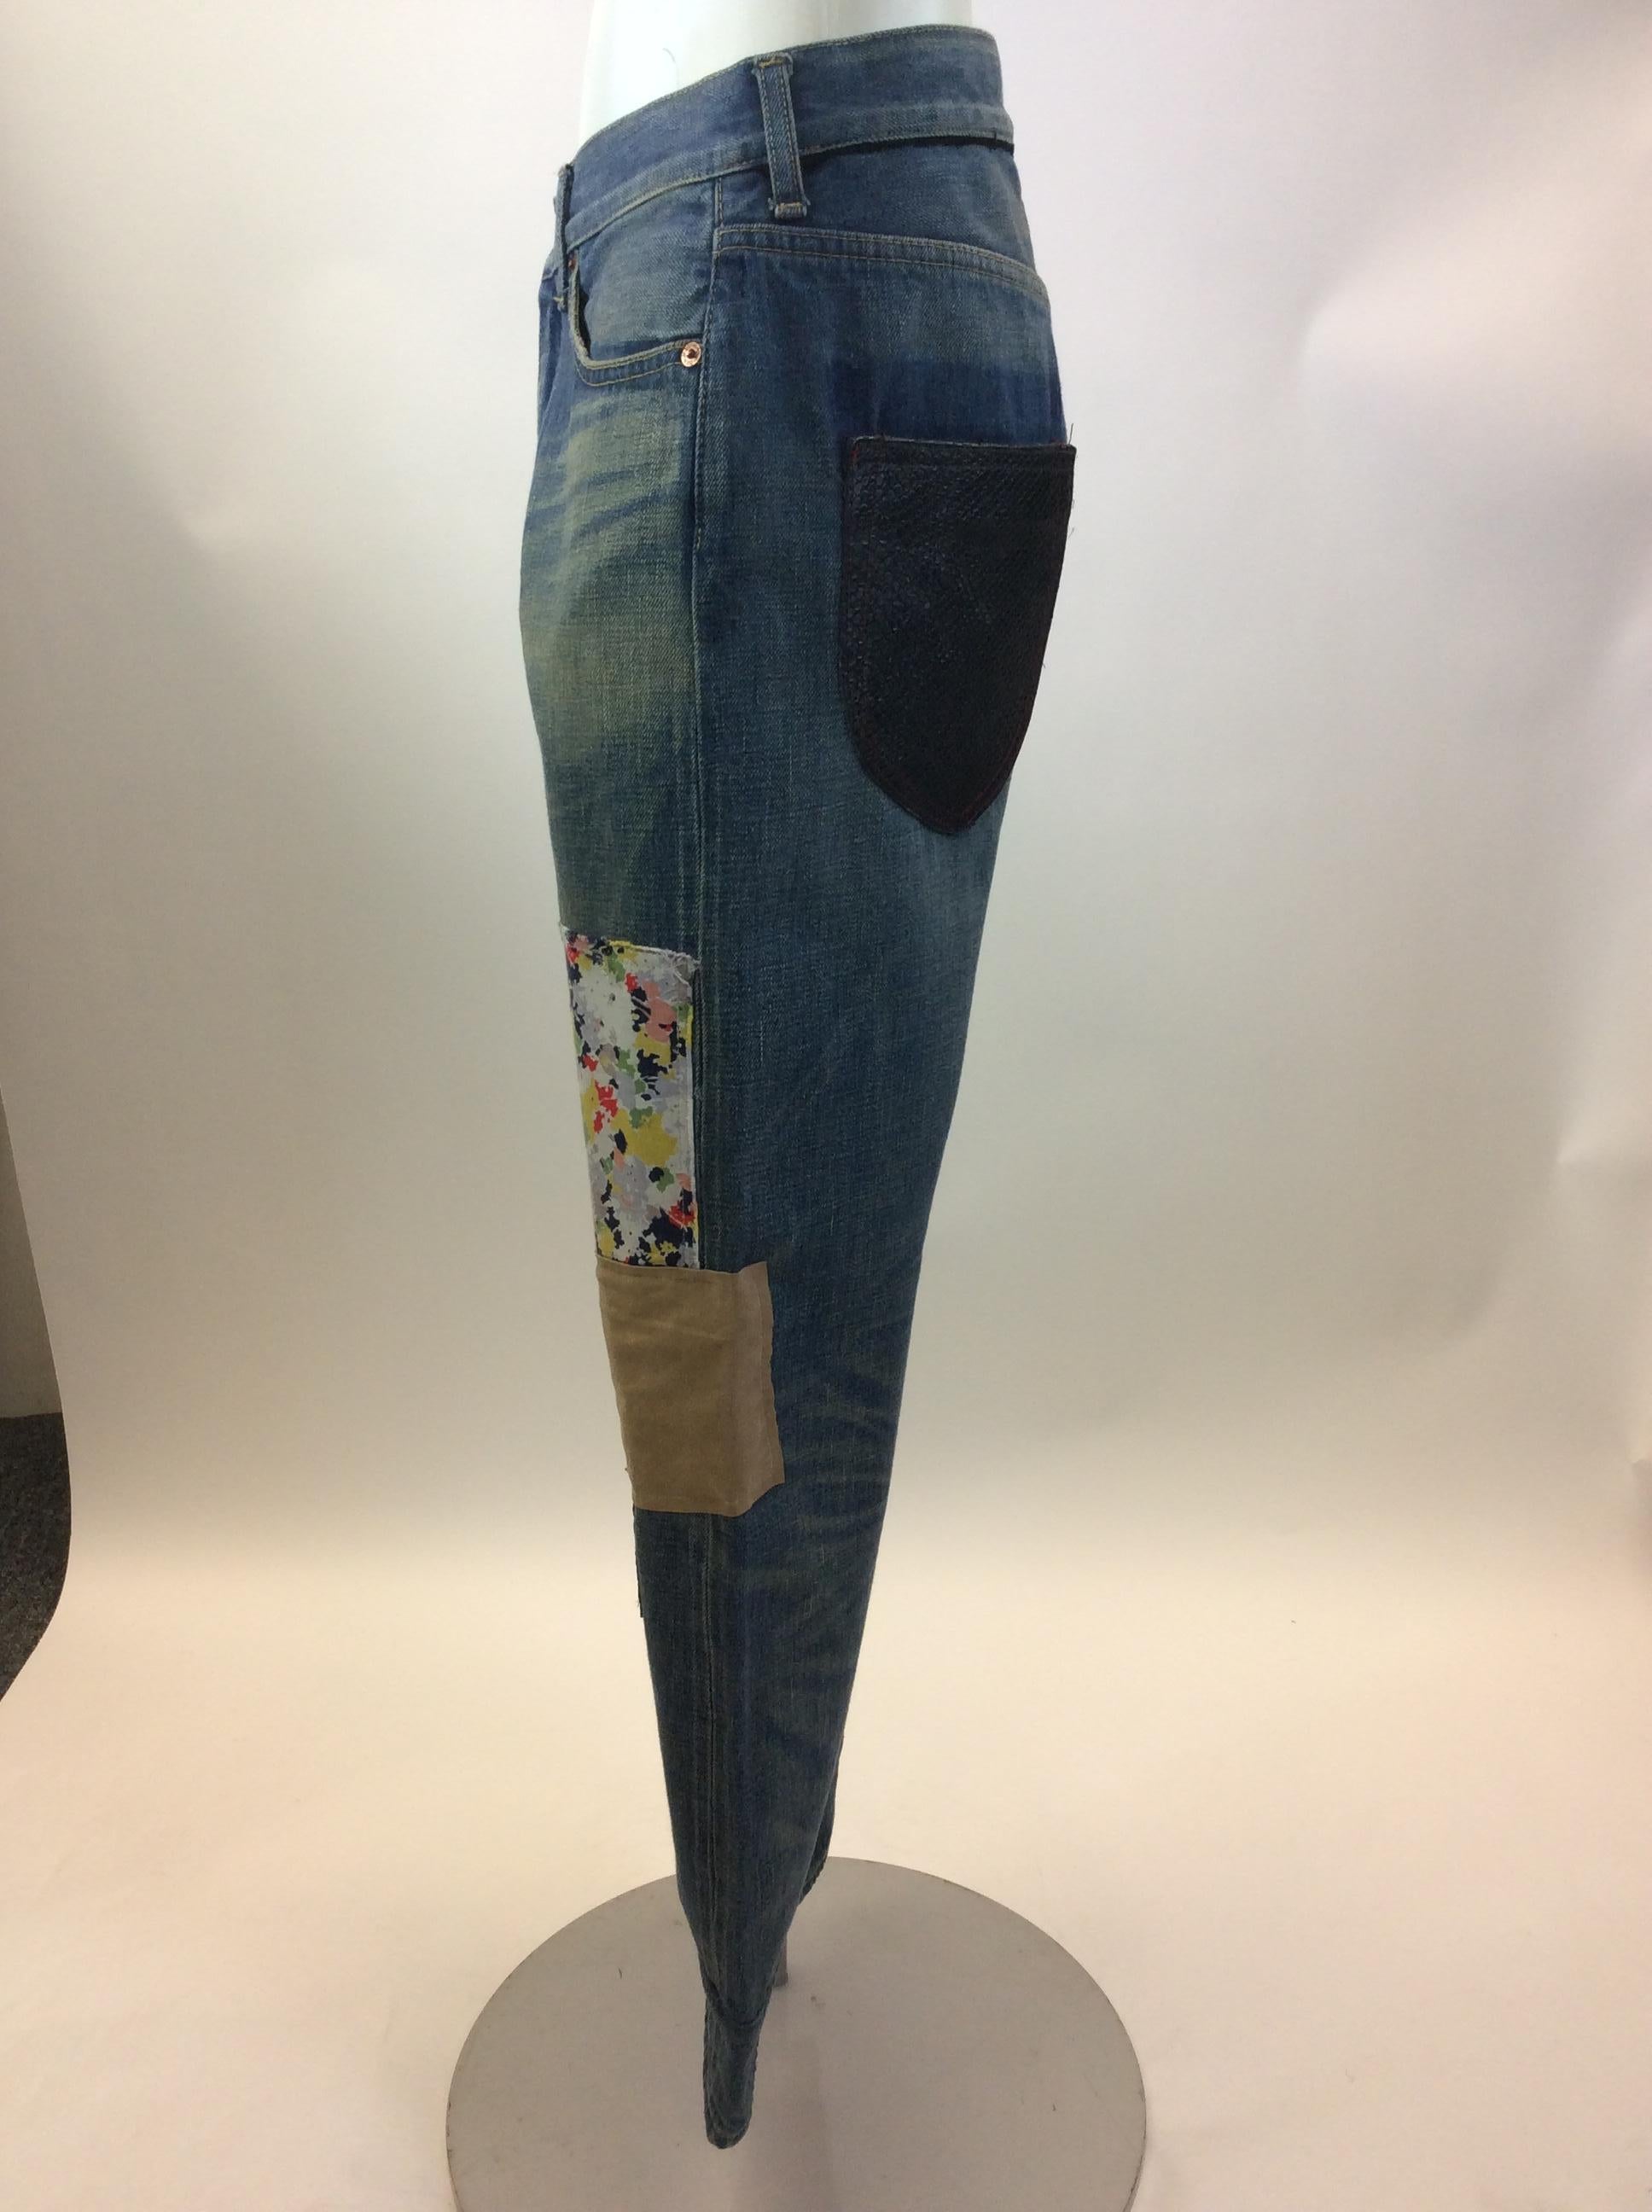 Junya Watanabe Denim Patch Jeans
$299
Made in Japan
Size Medium
Length 37